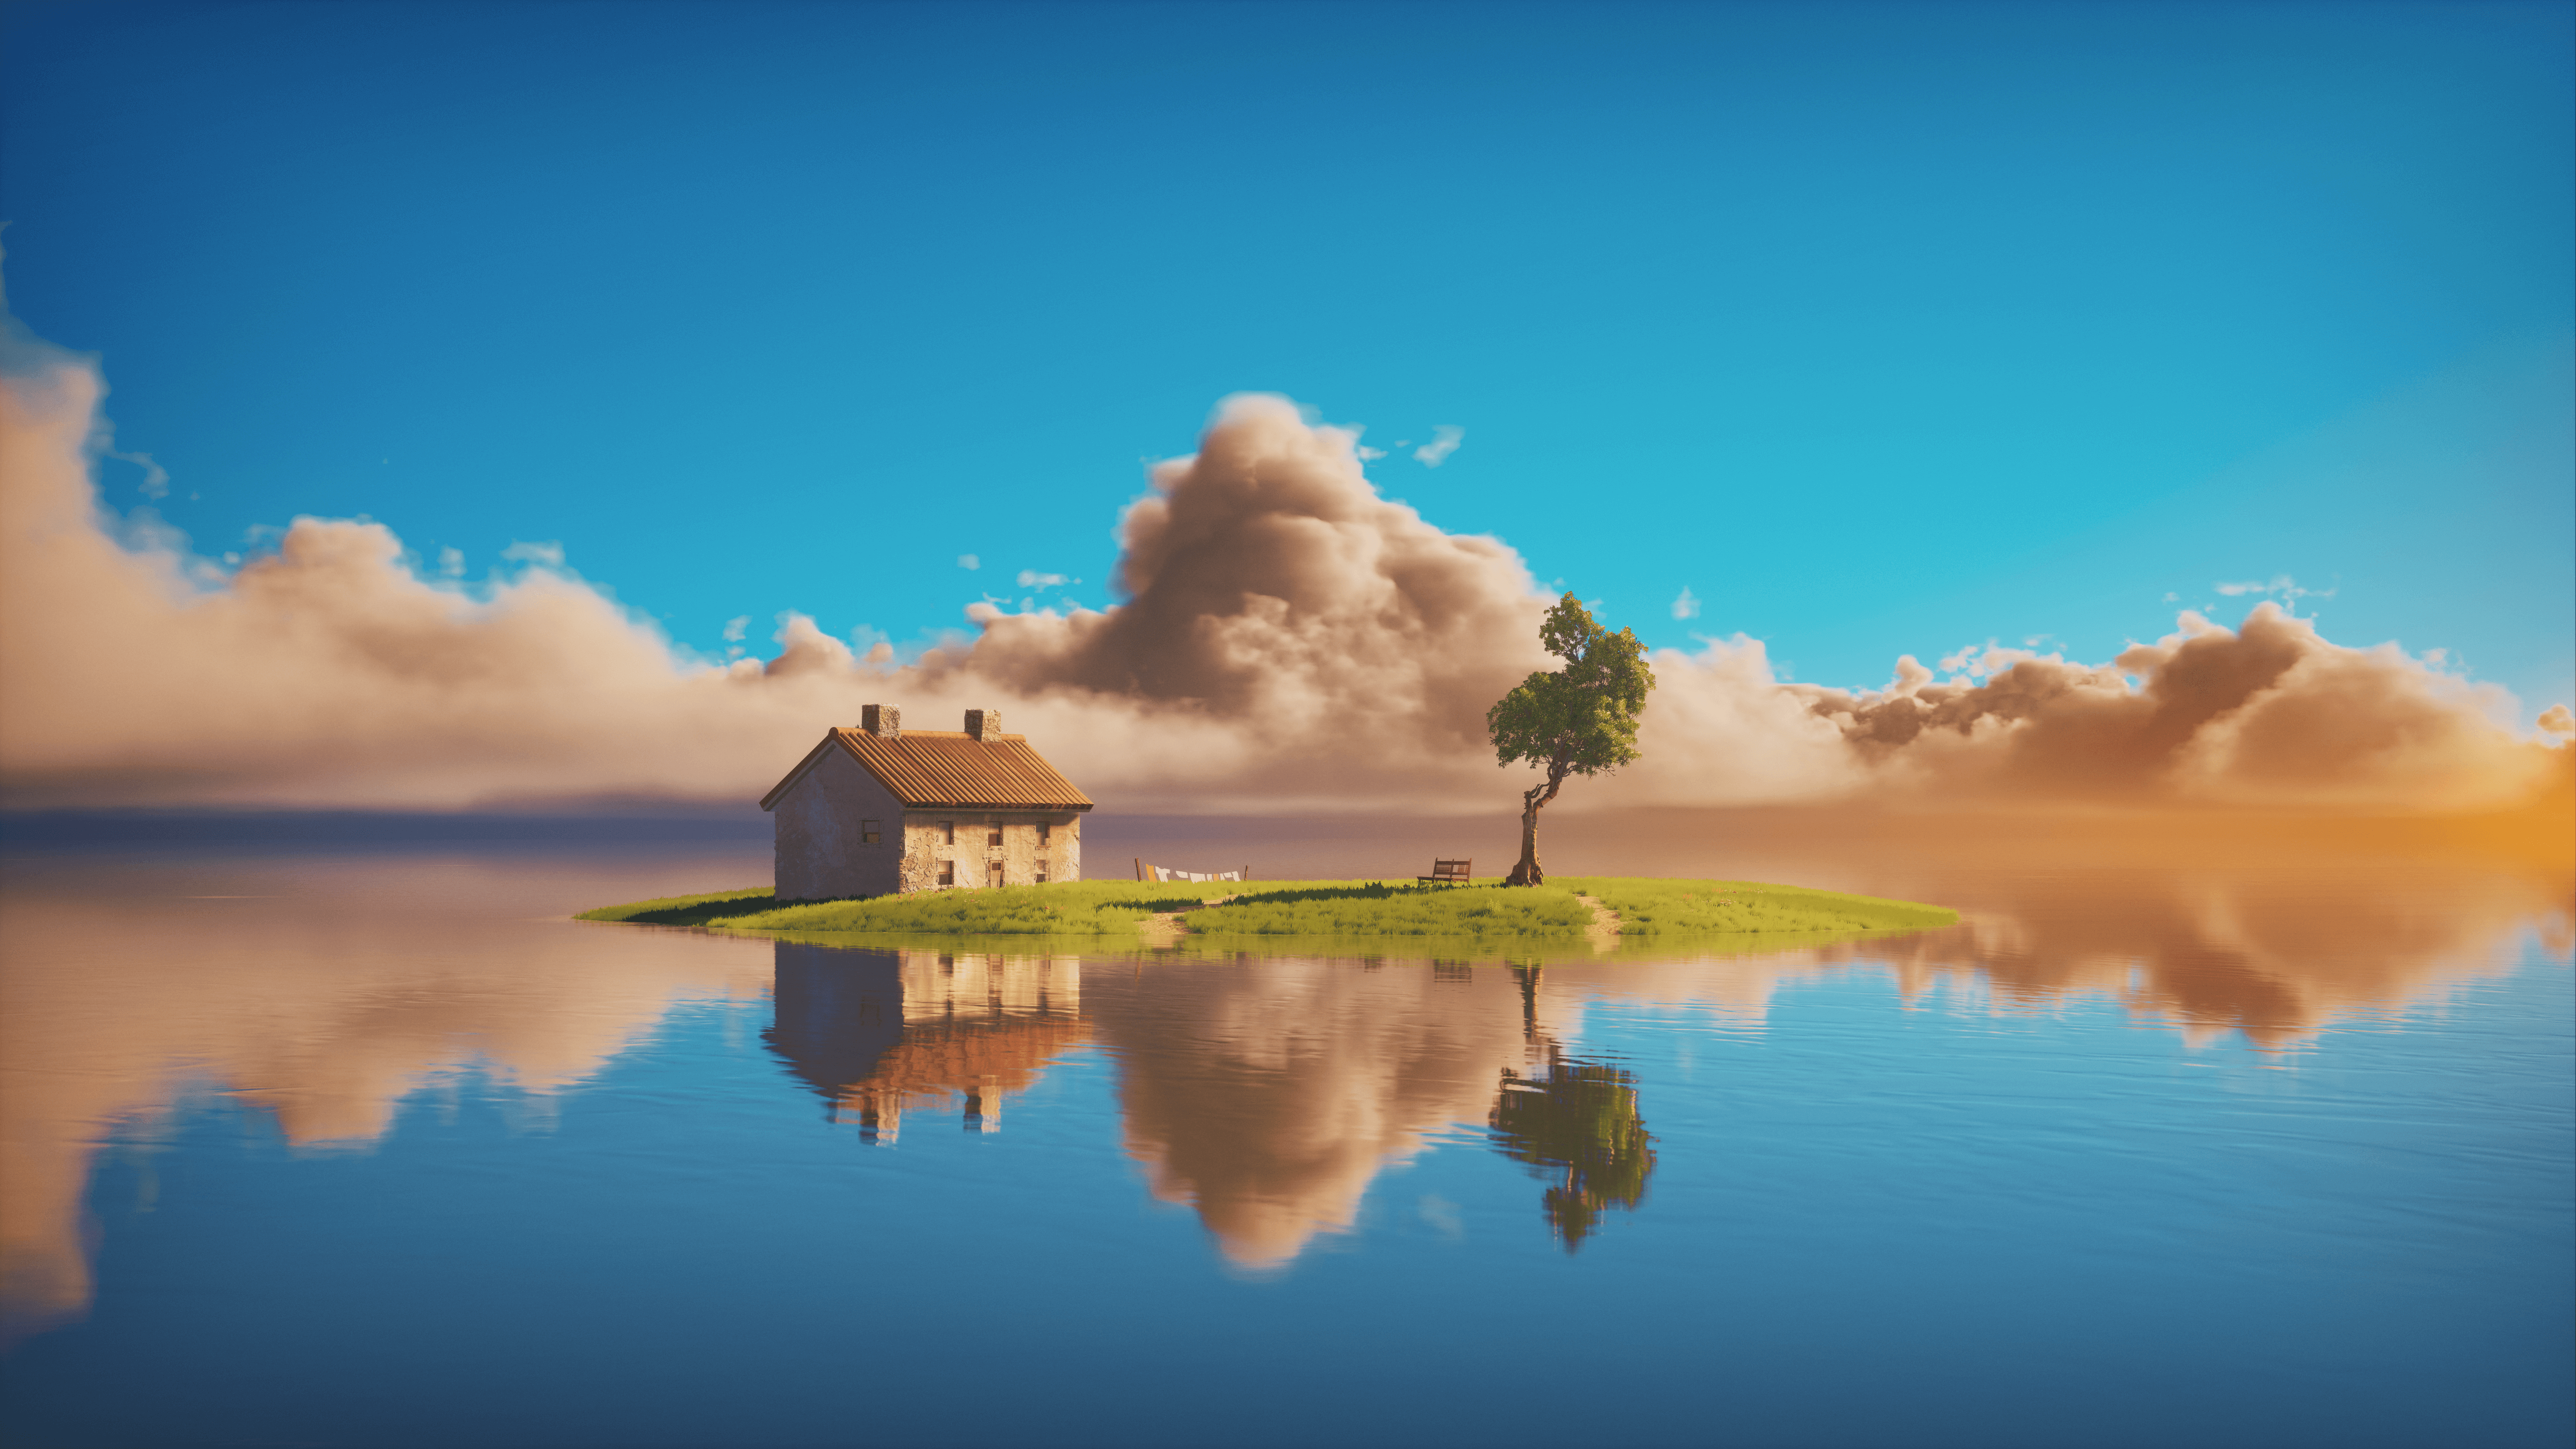 Louis Coyle Digital Art Artwork Illustration Landscape Nature Spirited Away House Island Reflection  5120x2880